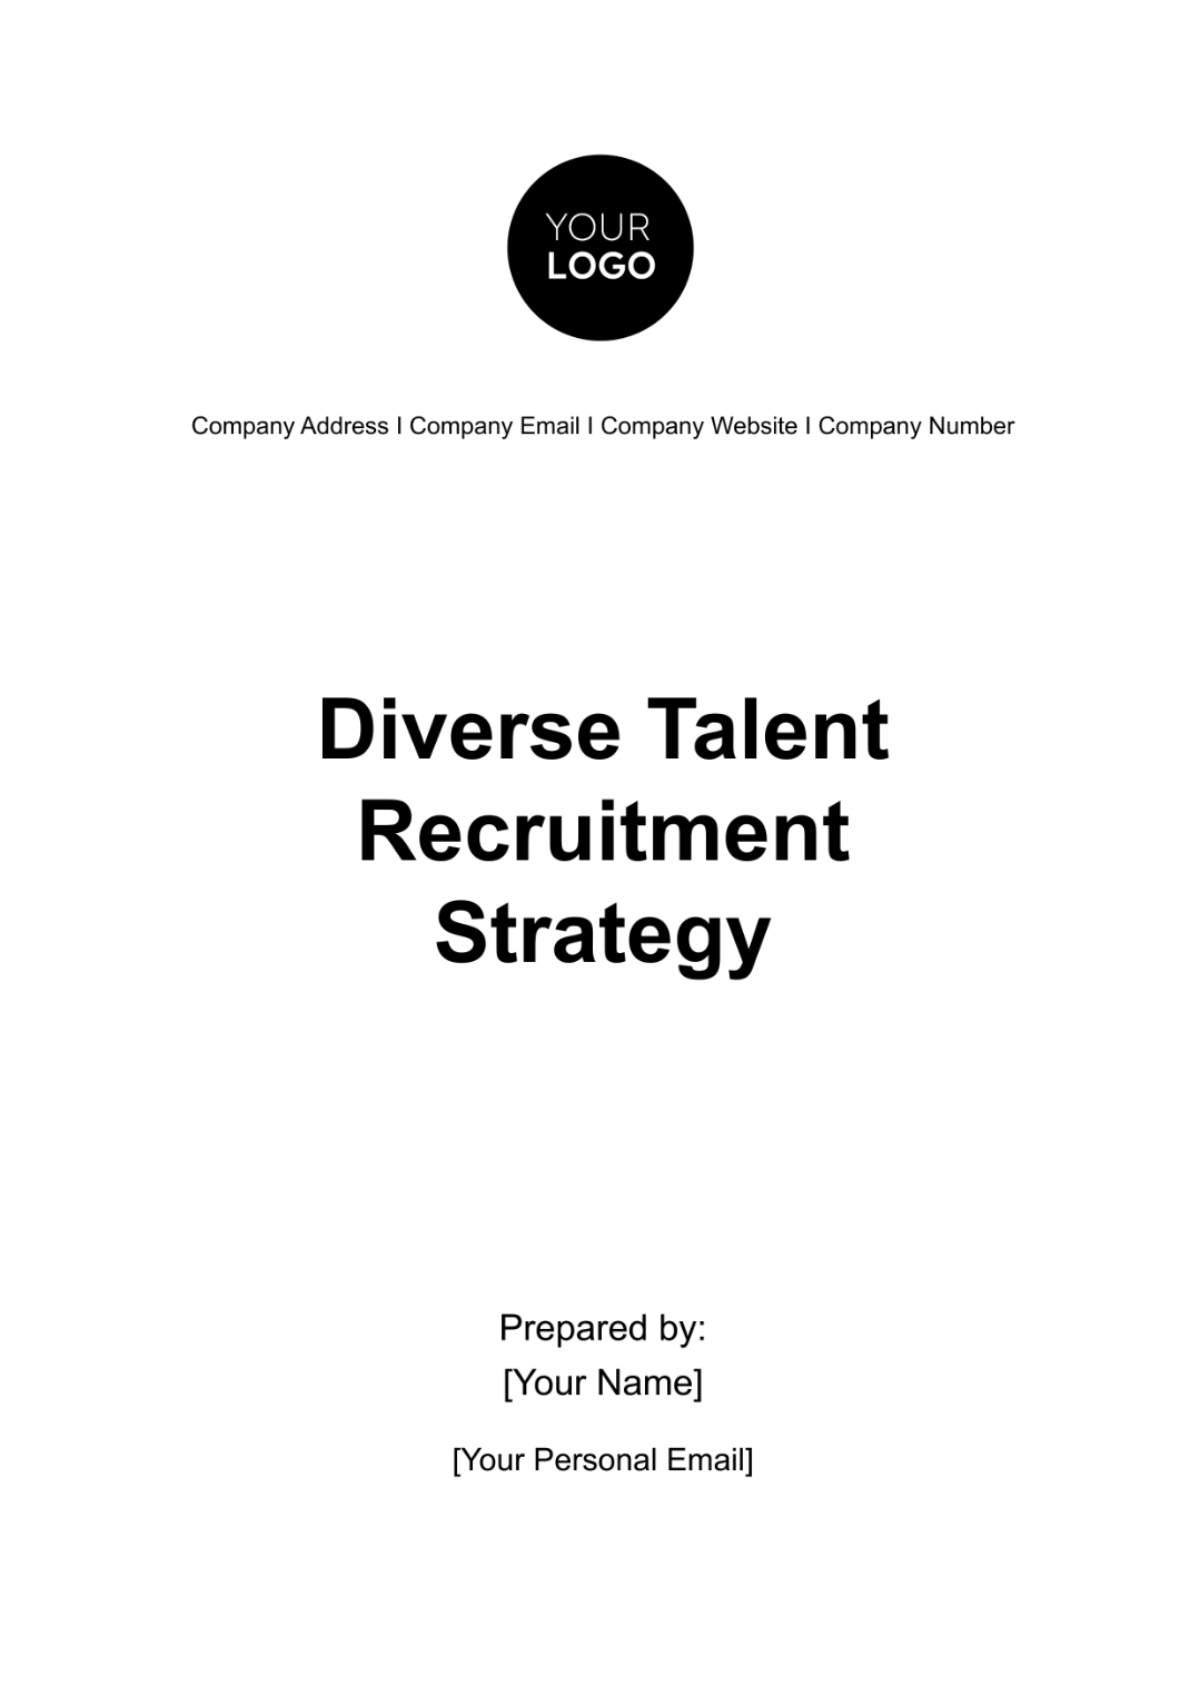 Free Diverse Talent Recruitment Strategy HR Template